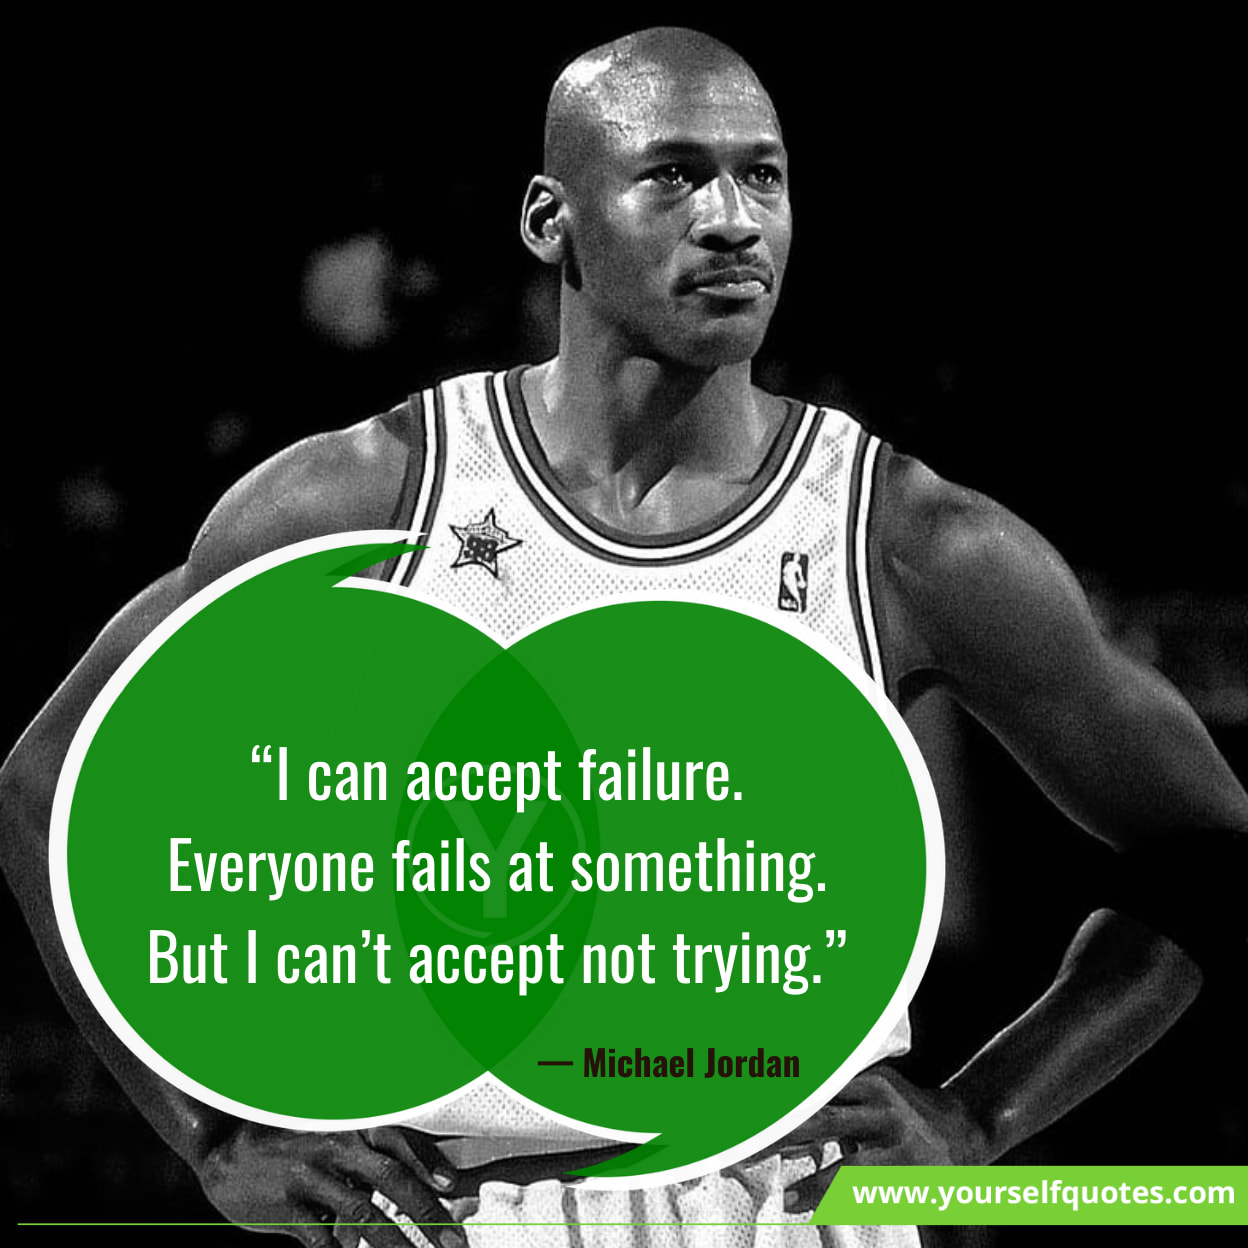 Michael Jordan Quotes On Success